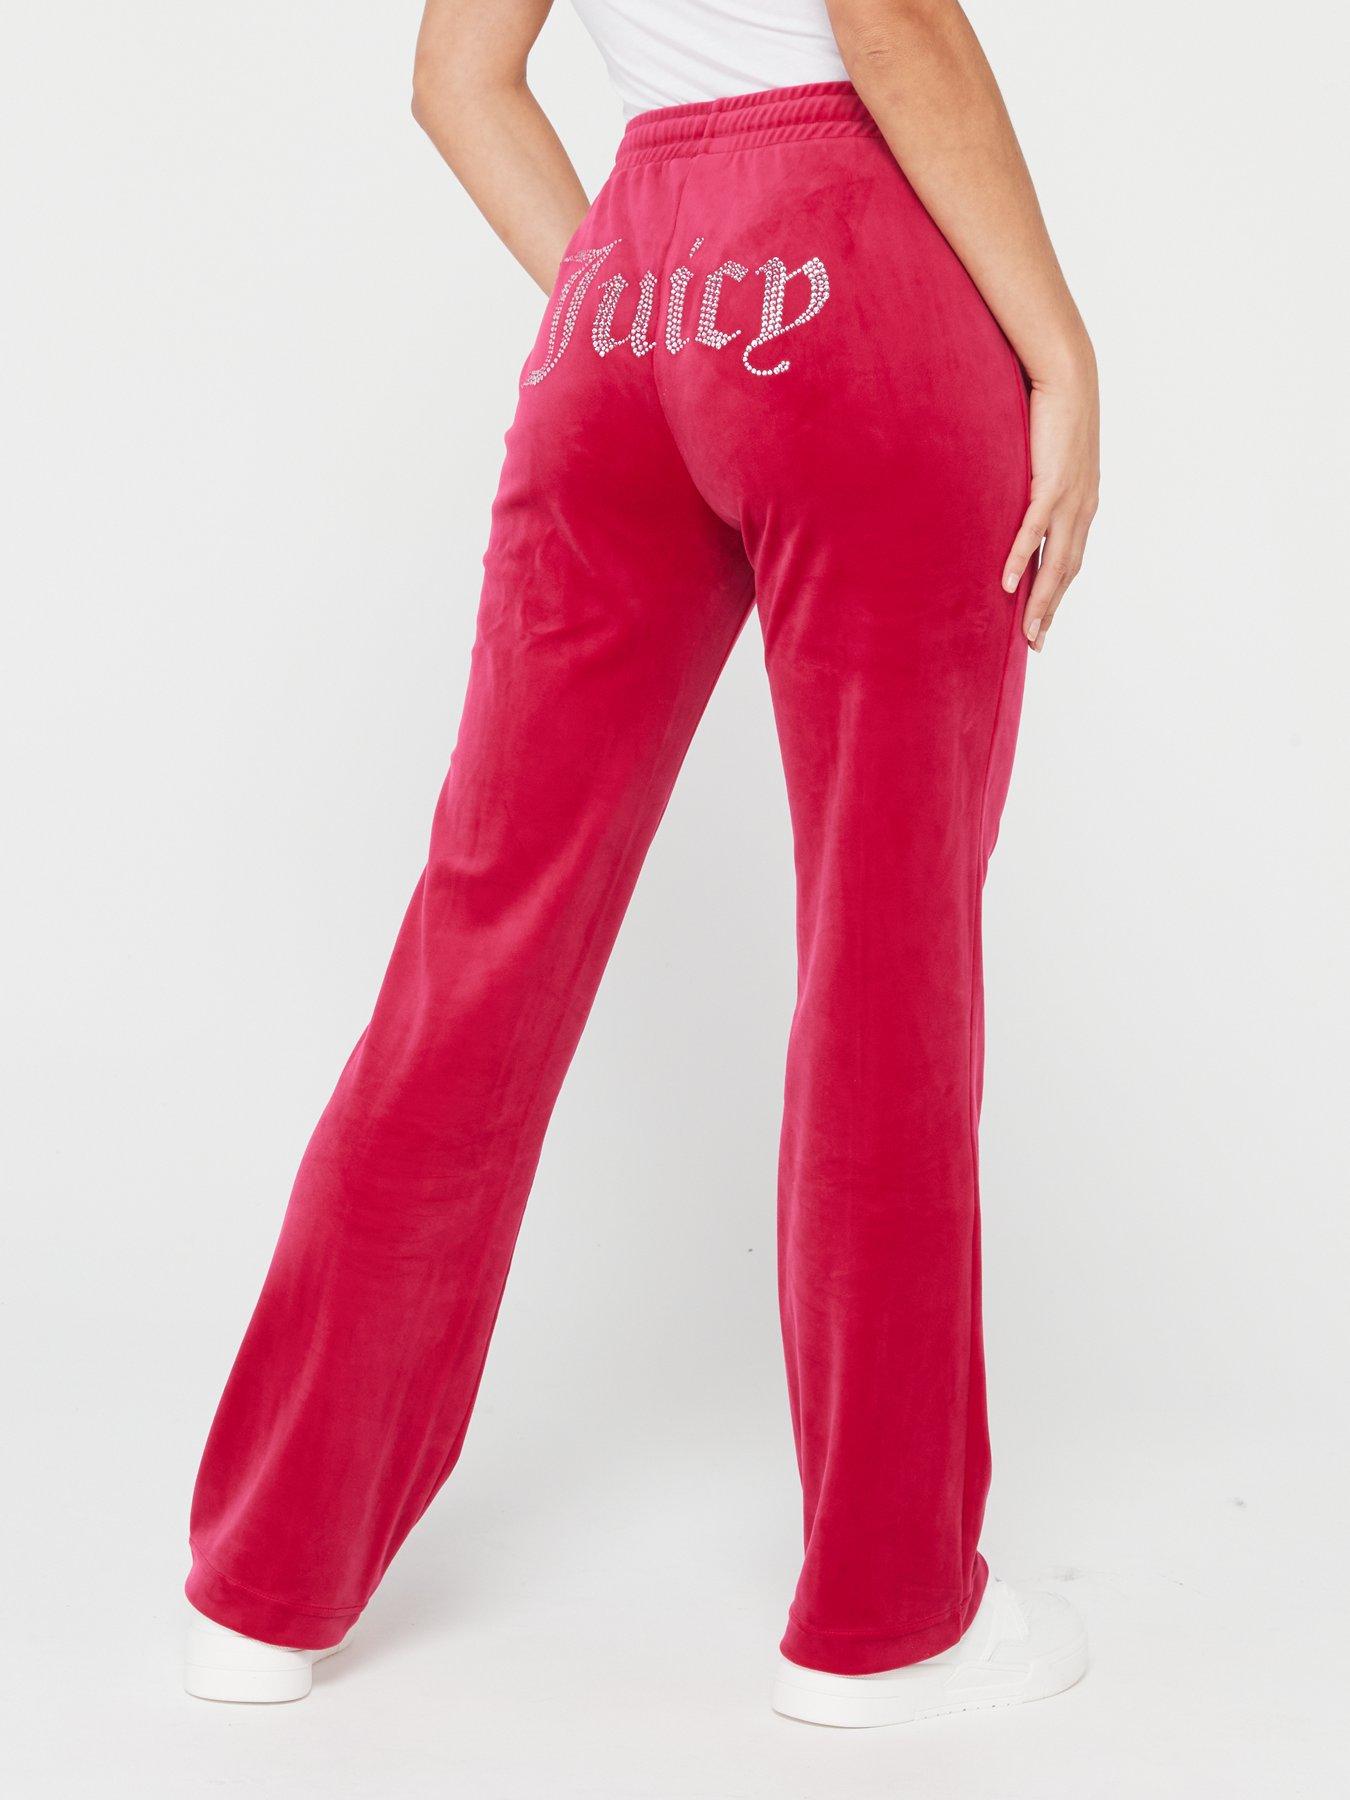 Juicy Couture printed bralet and leggings co-ord in multi